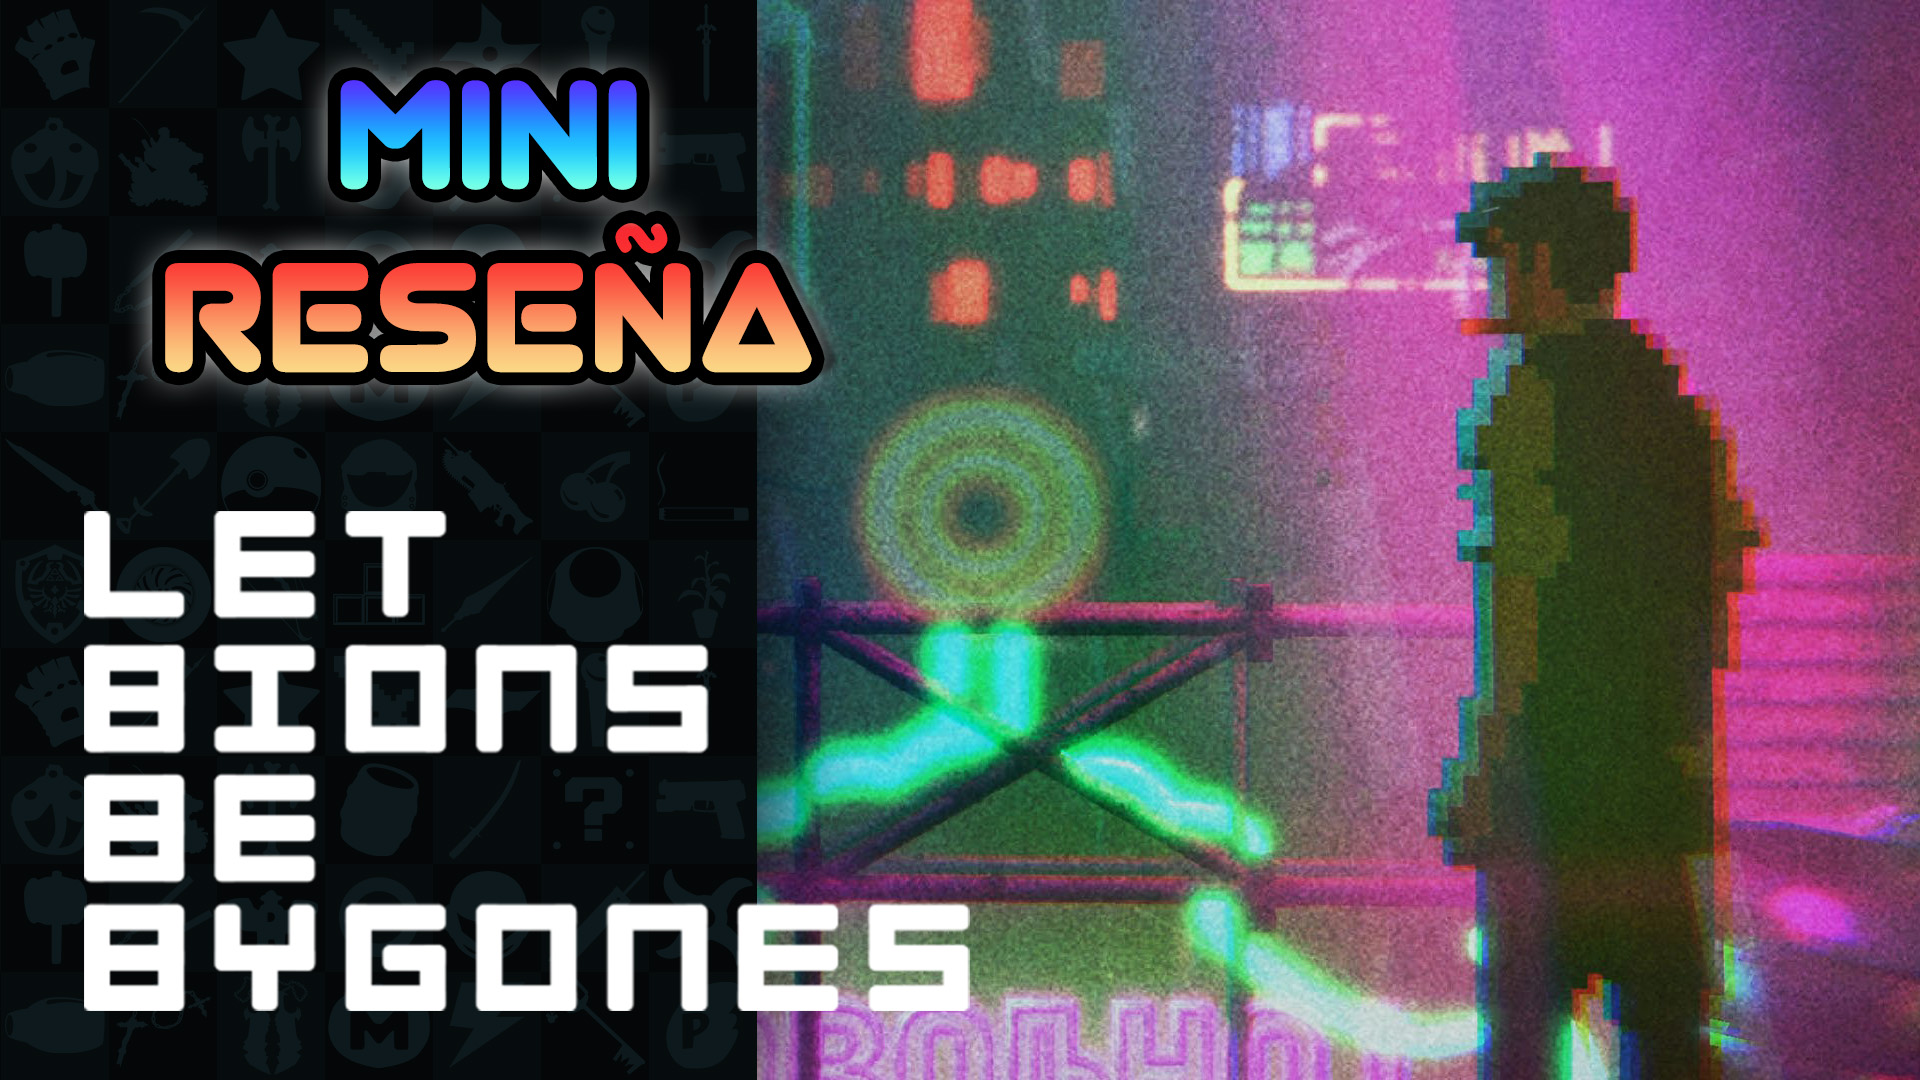 Mini Reseña Let Bions Be Bygones – Cyberpunk Noir del Bueno